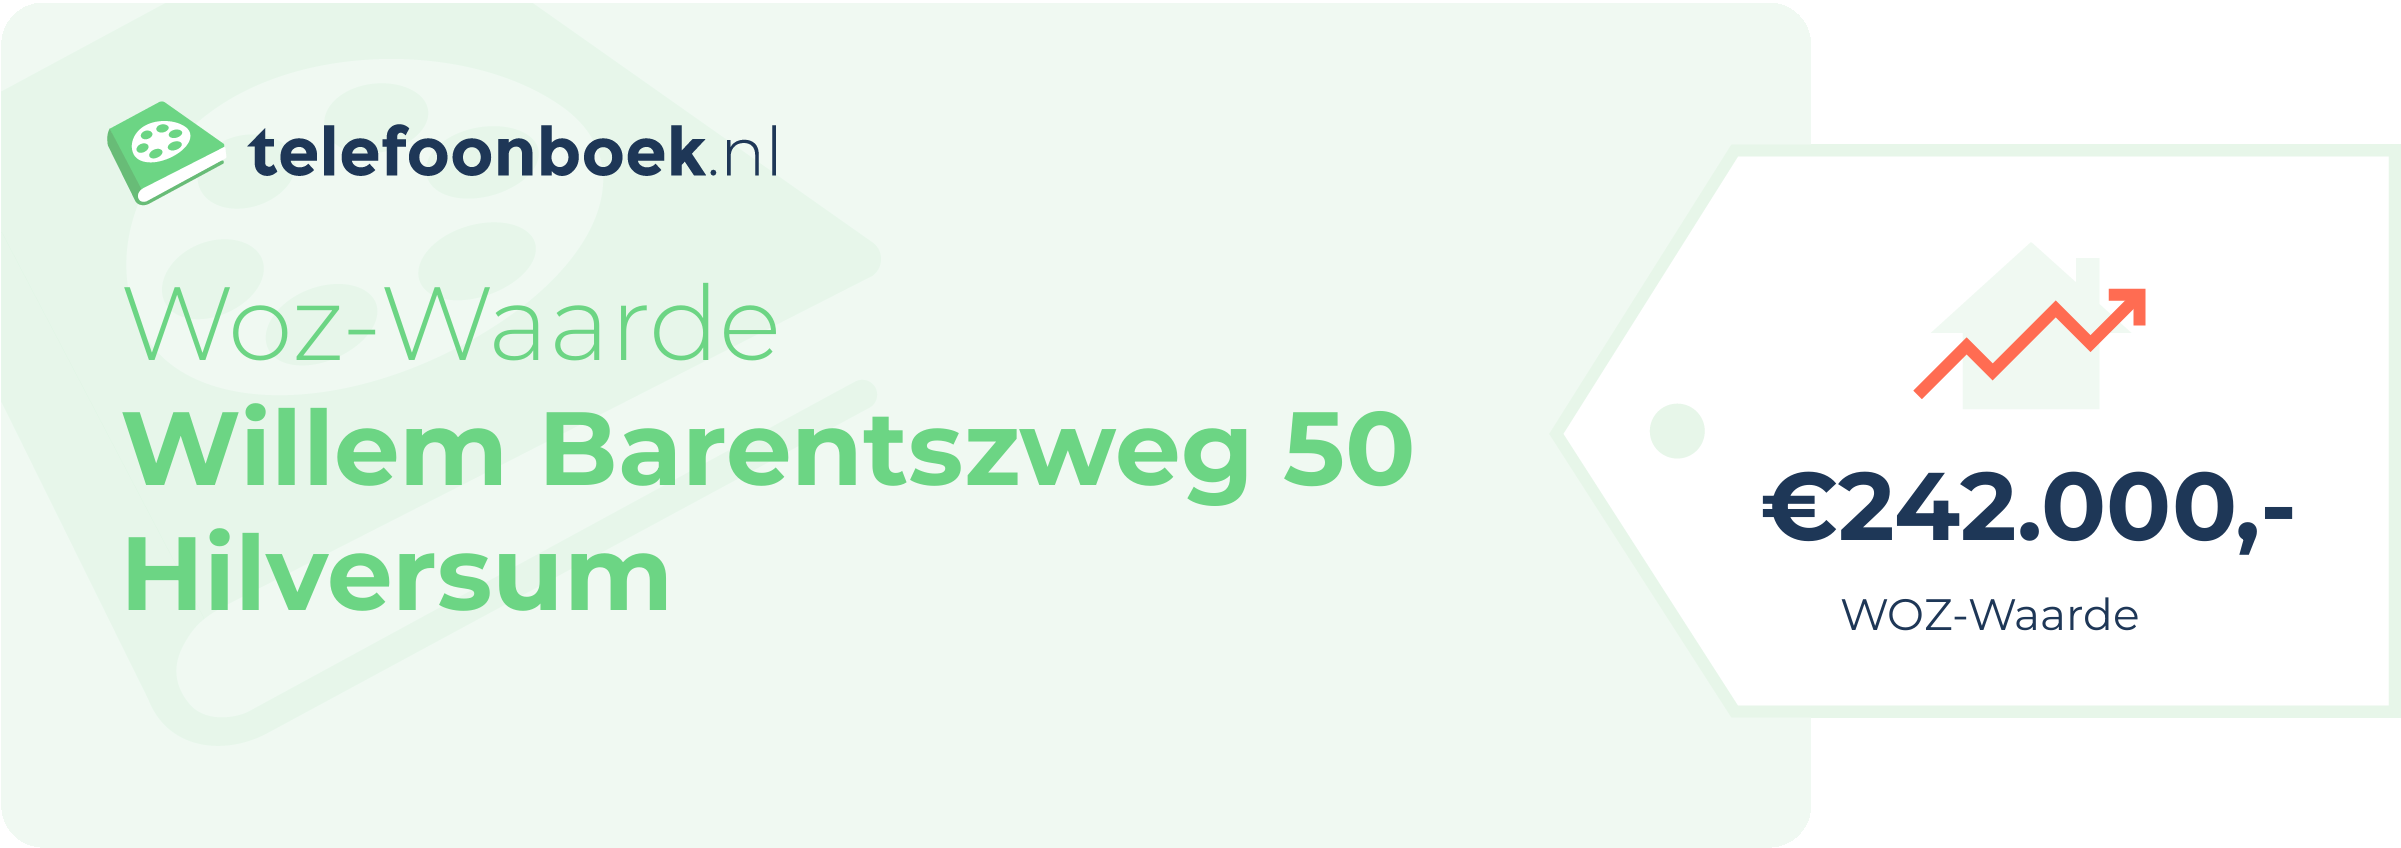 WOZ-waarde Willem Barentszweg 50 Hilversum